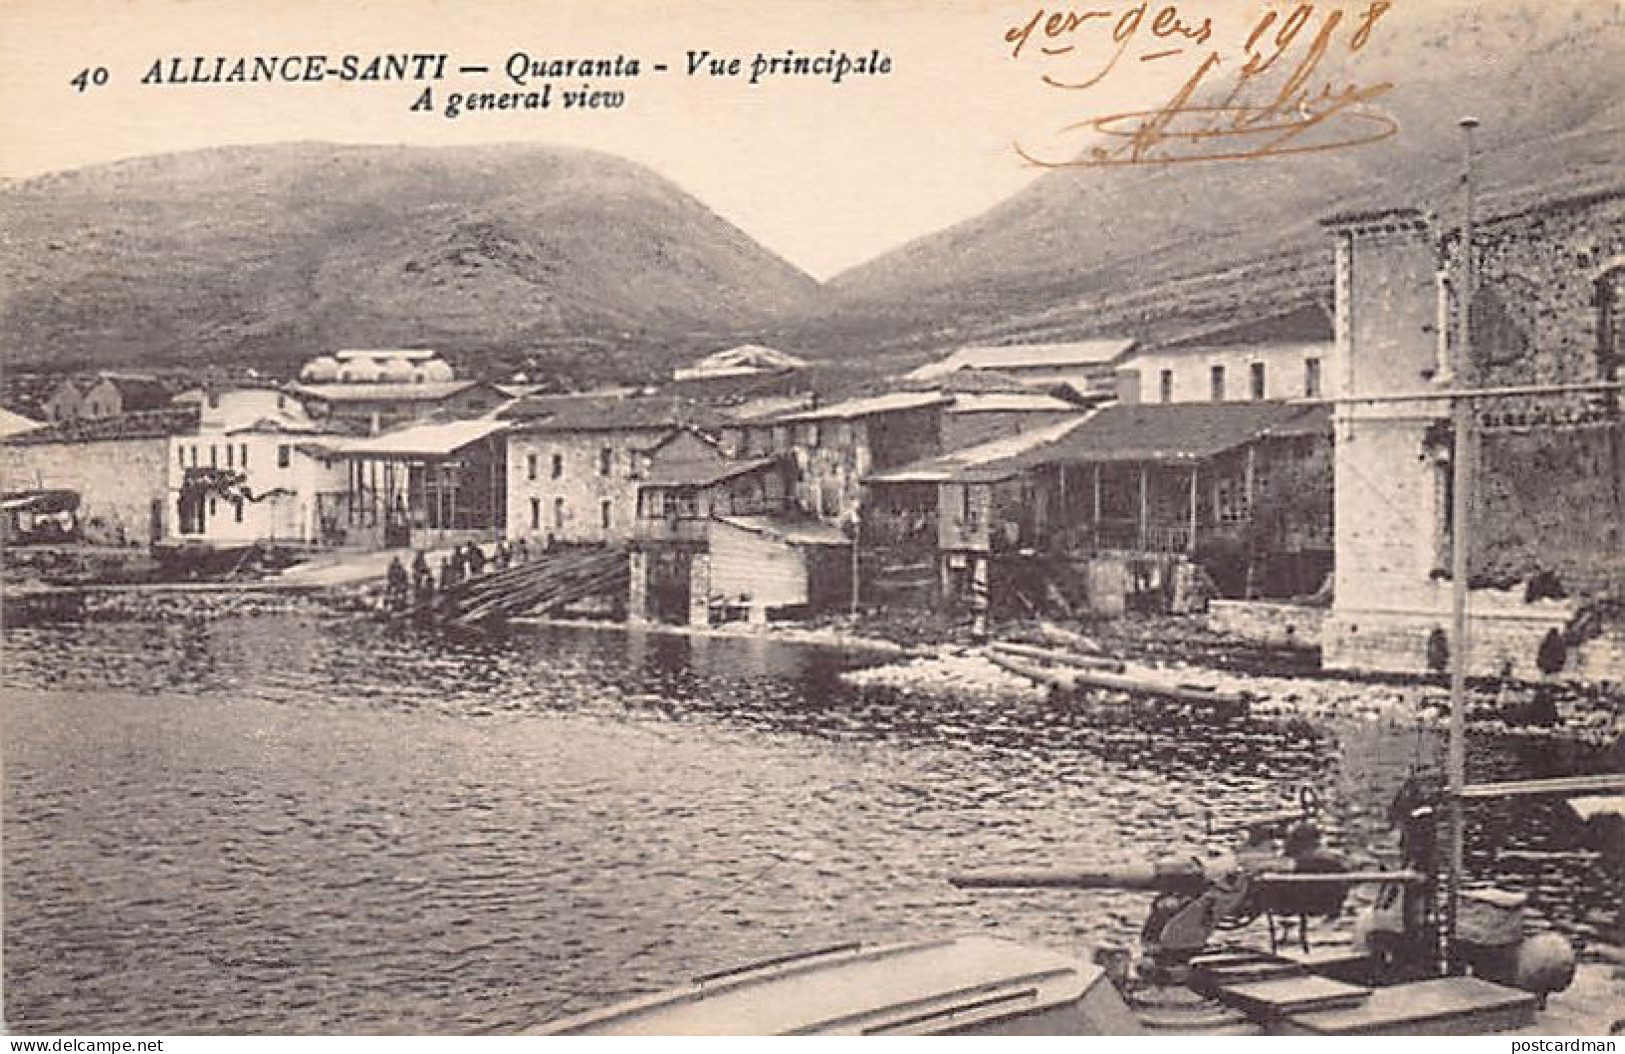 Albania - SARANDË - General View - Publ. Ch. Colas 40 - Albanien